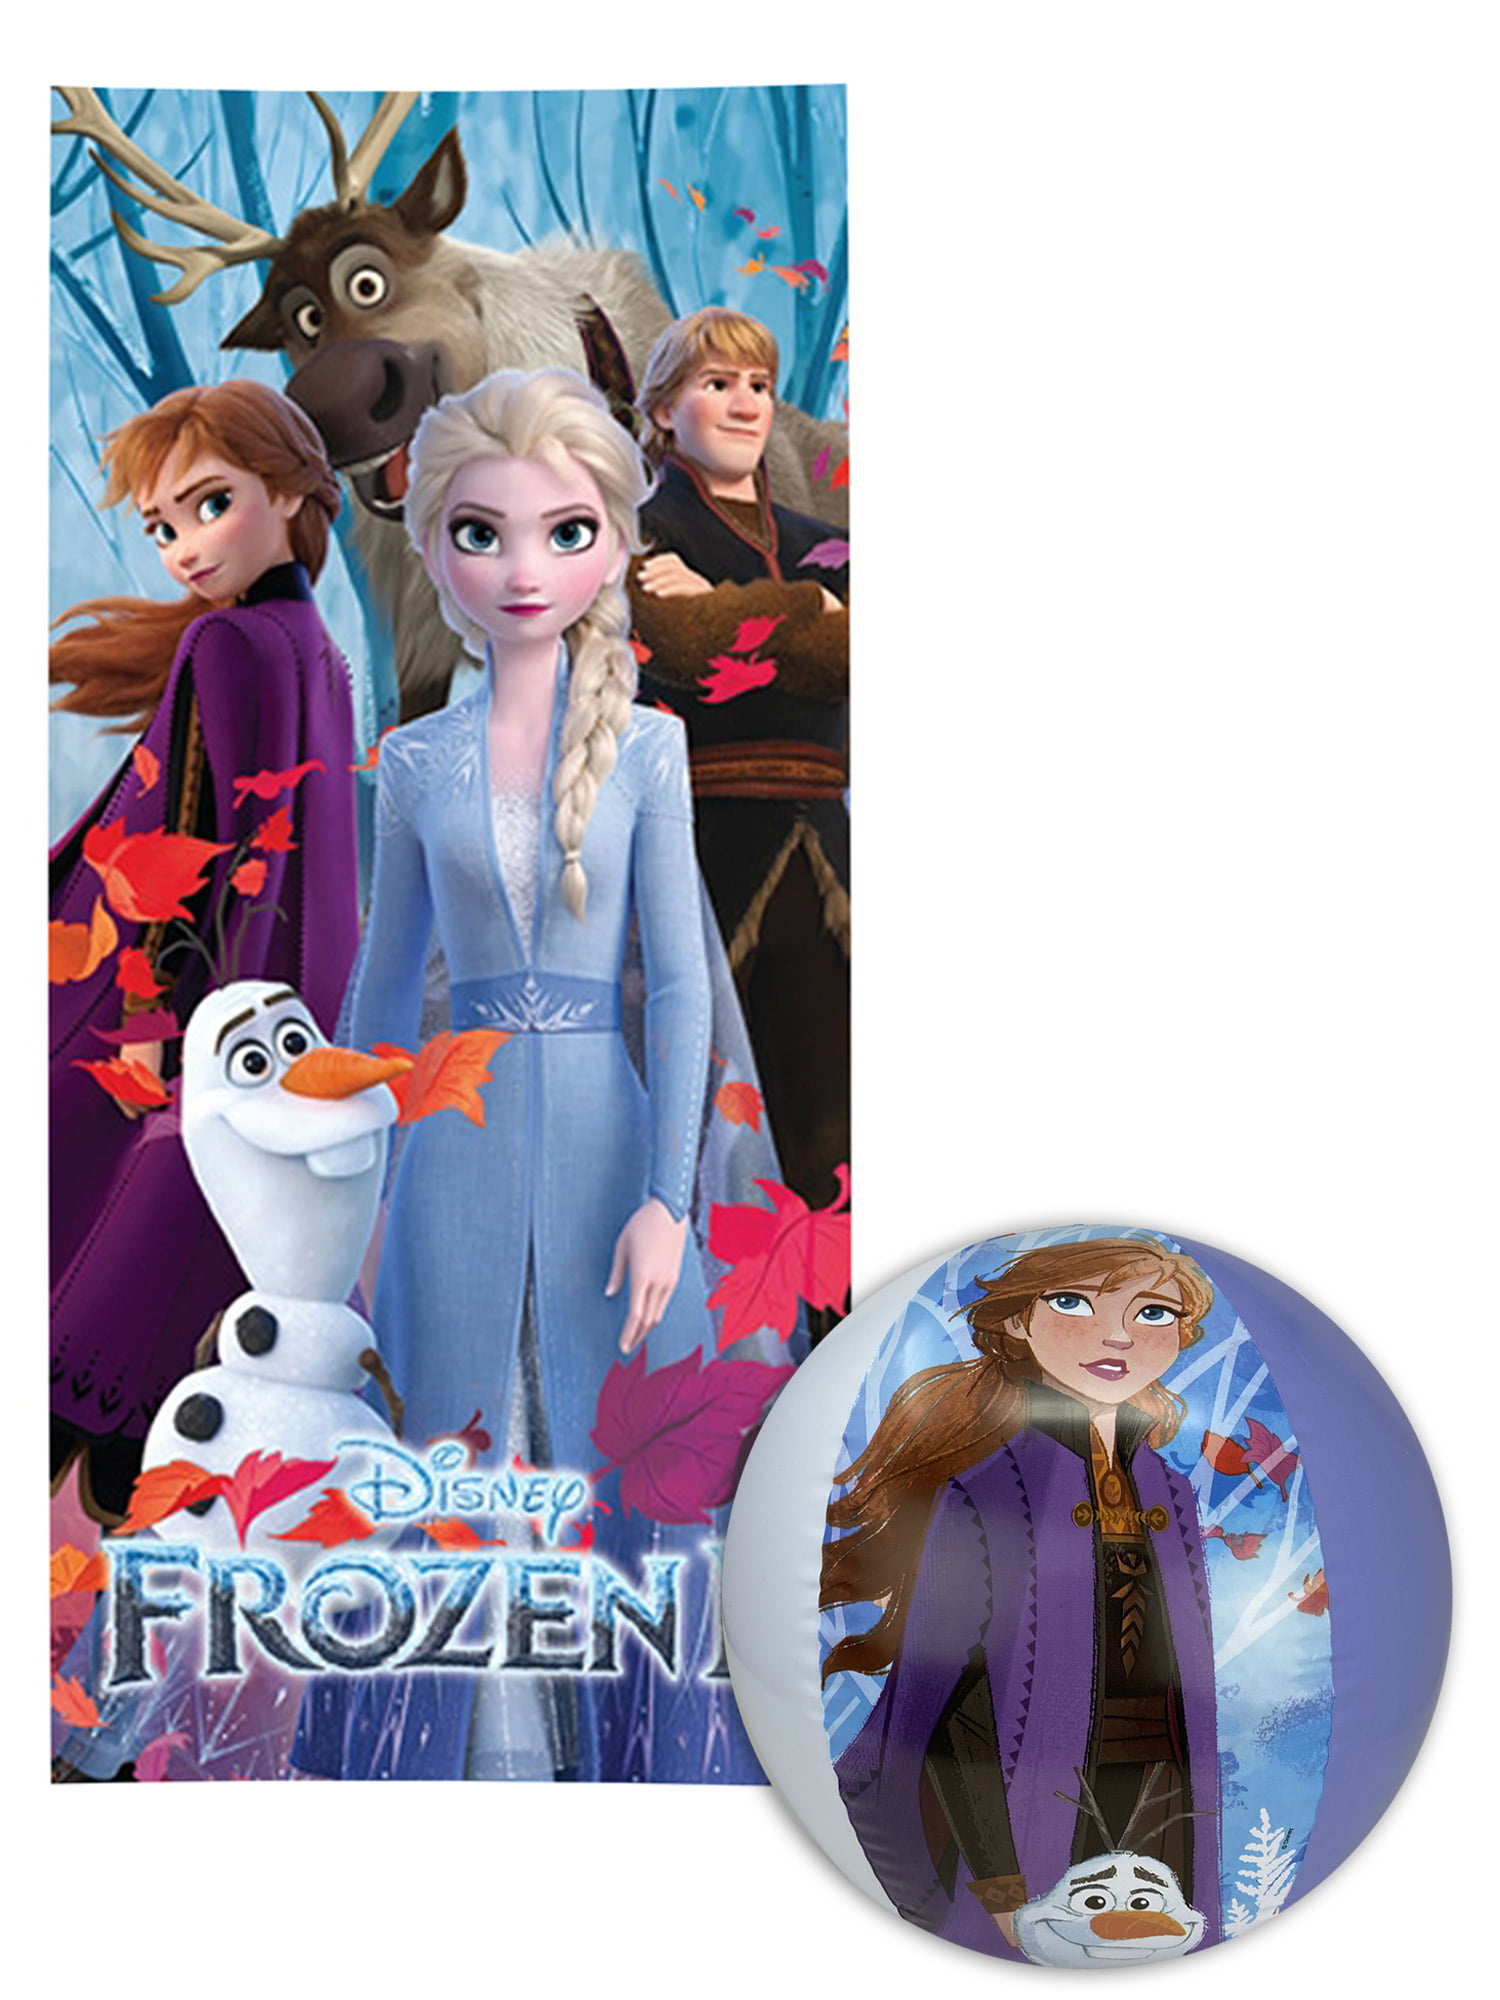 Official Disney Frozen Towel Anna and Elsa Snowflake Scene Crystal Printed Towel 70 cm x 140 cm FT-2 